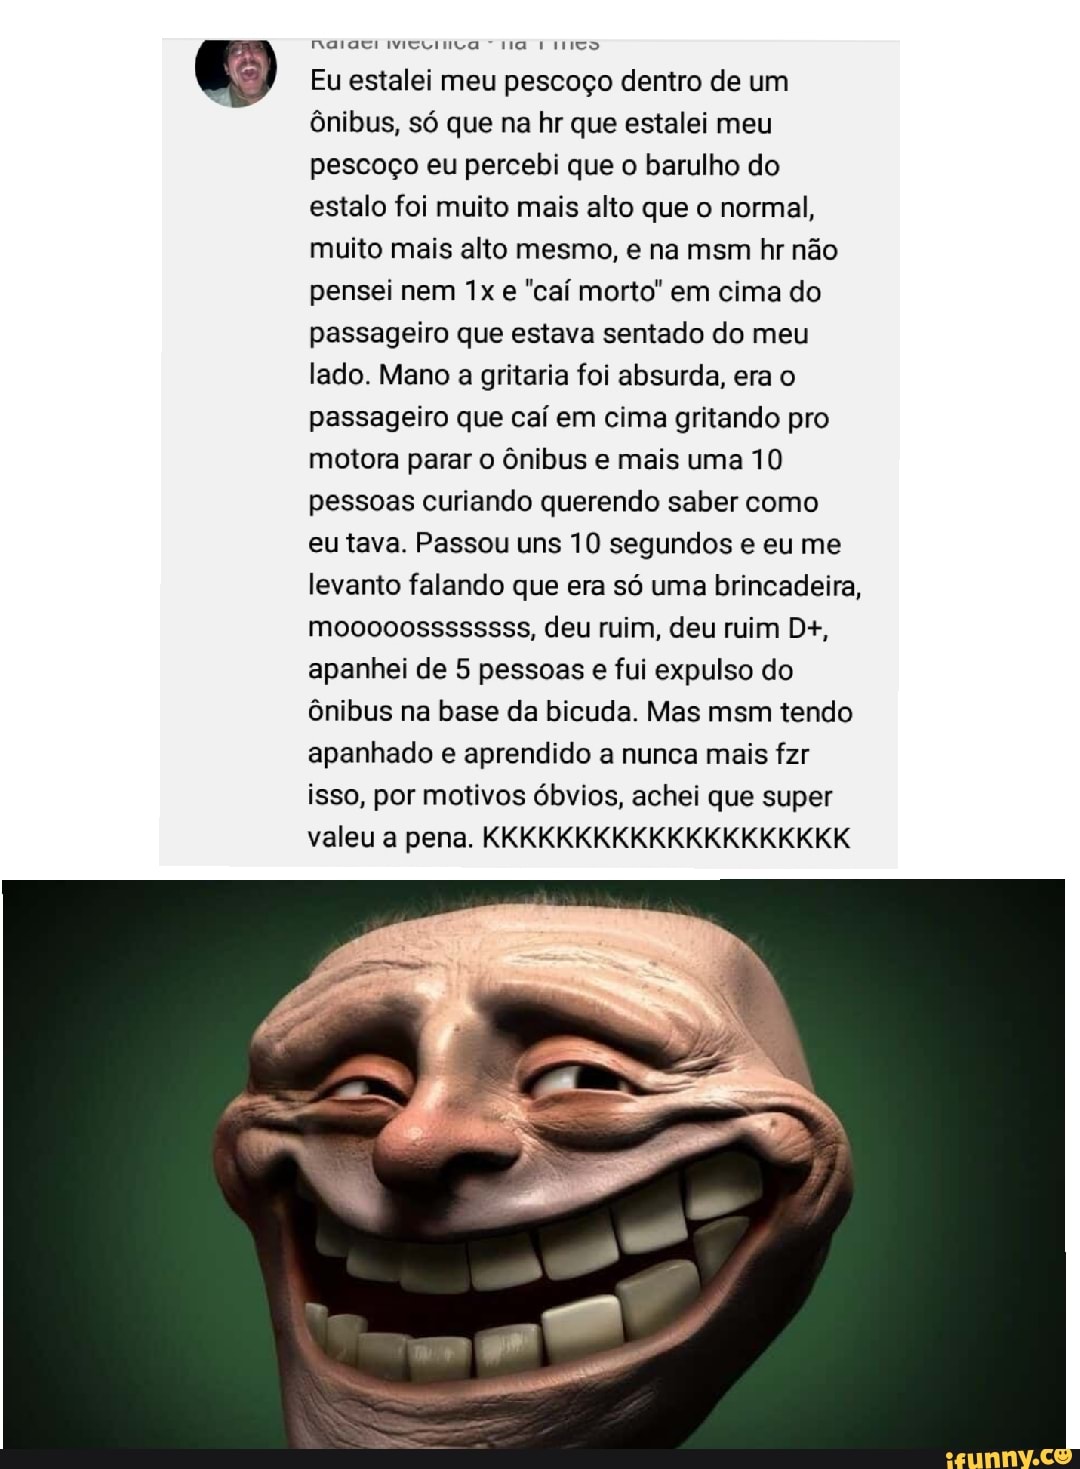 Base de meme do trollface triste - iFunny Brazil